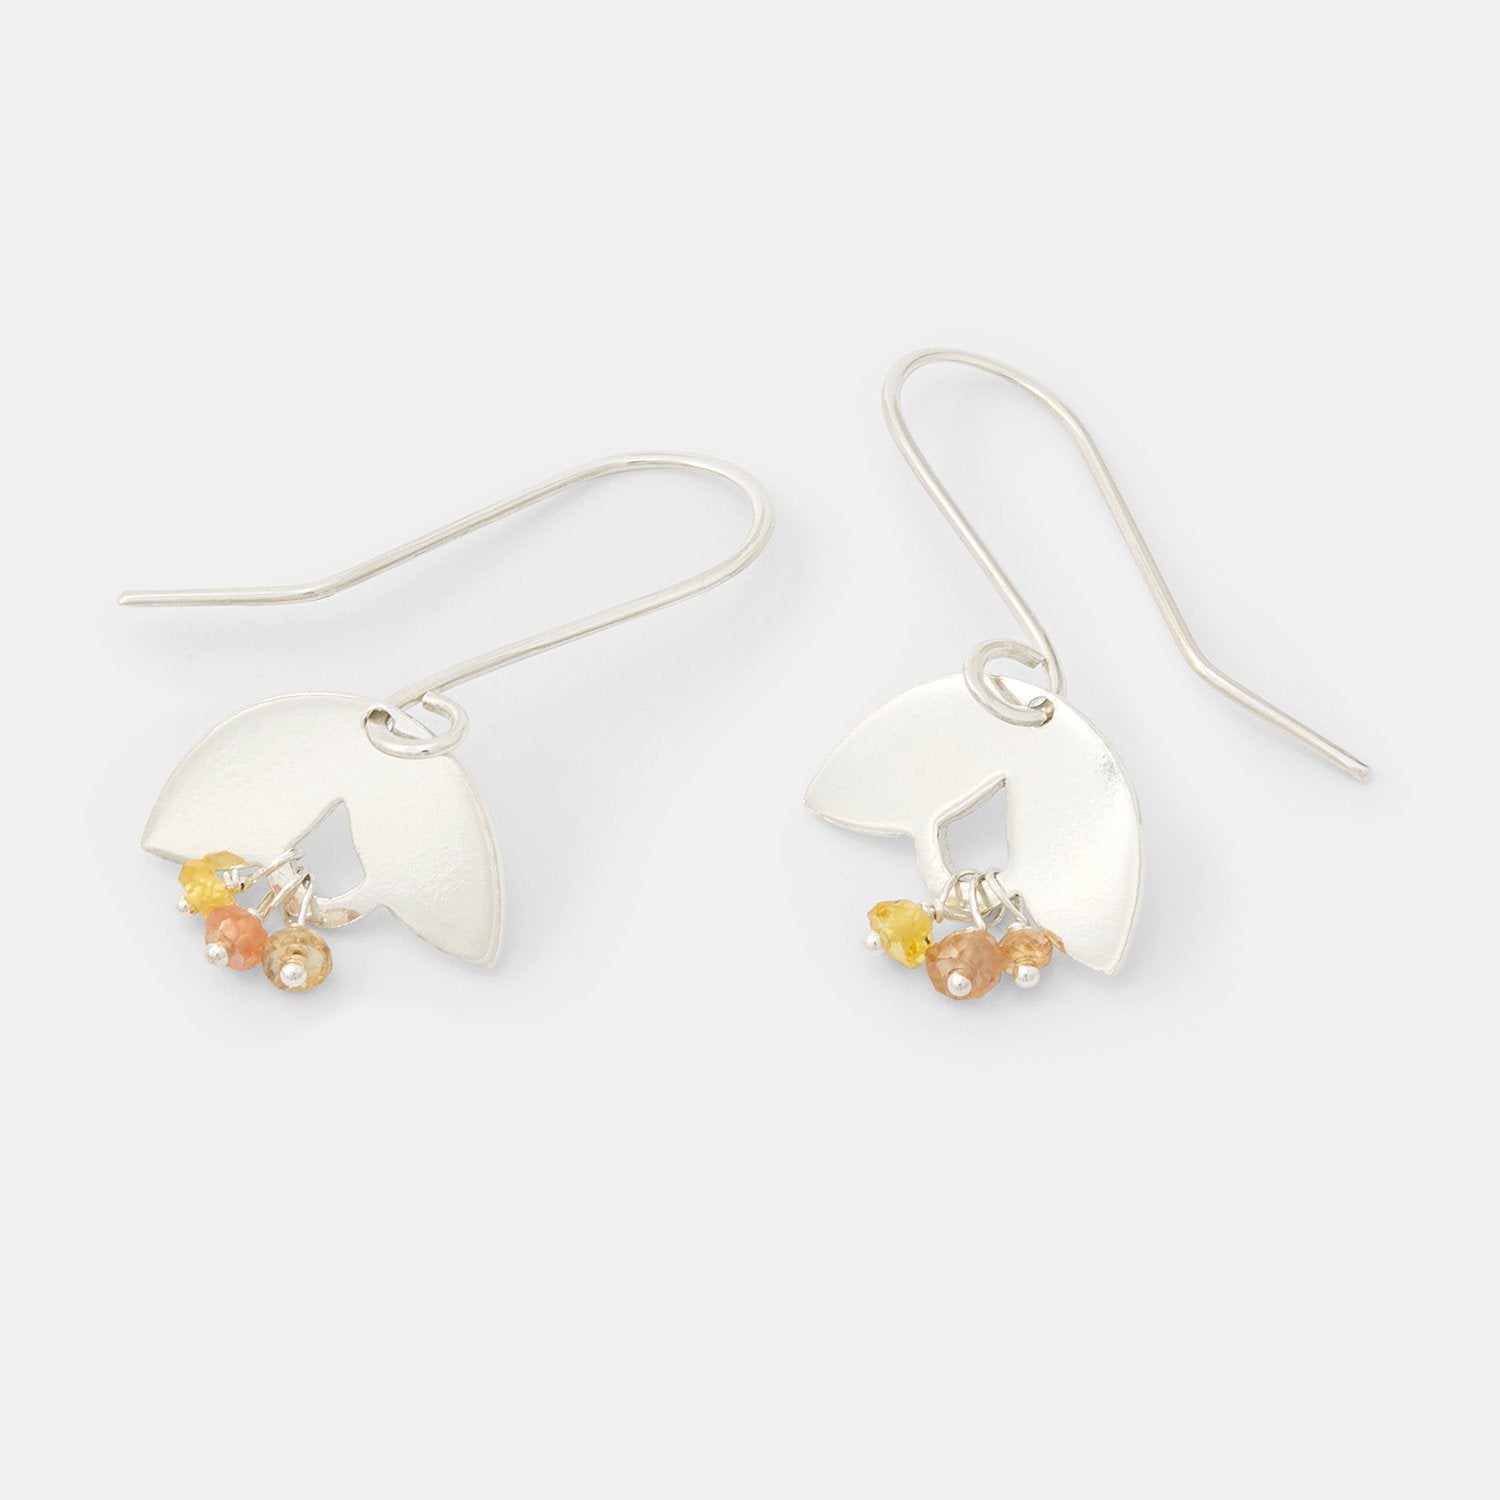 Leaves & sapphire drop earrings - Simone Walsh Jewellery Australia